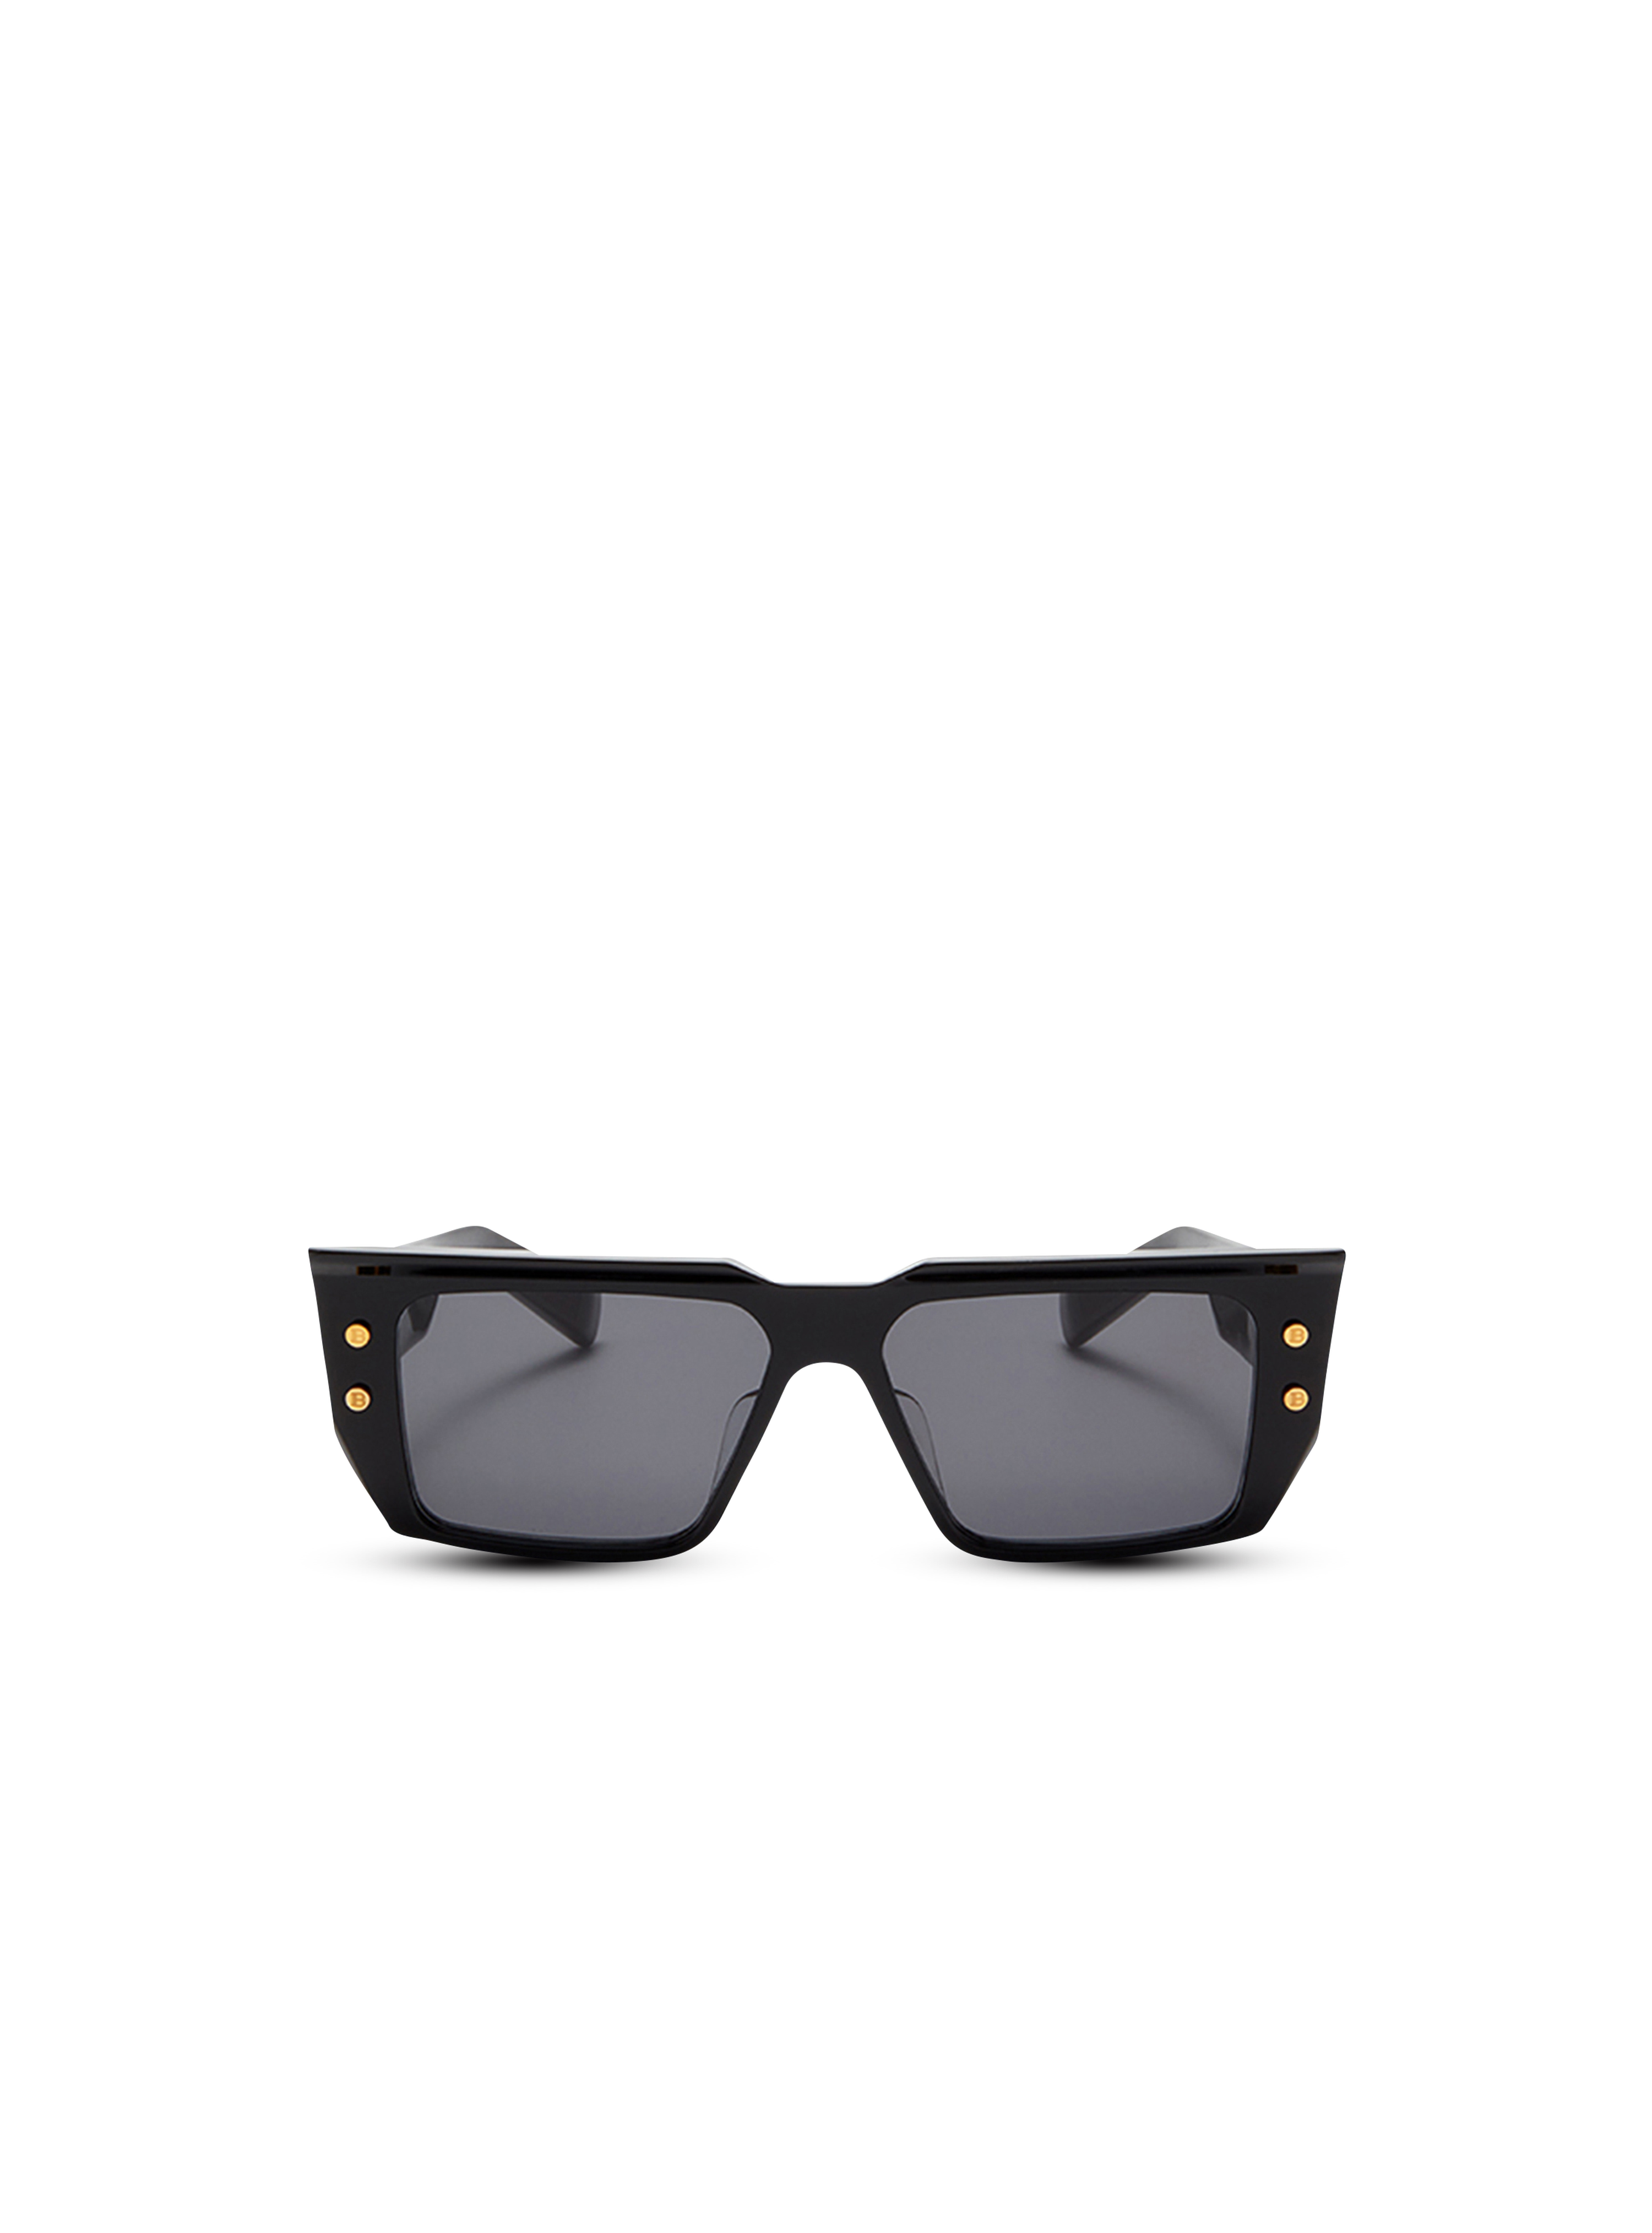 B-VI sunglasses, black